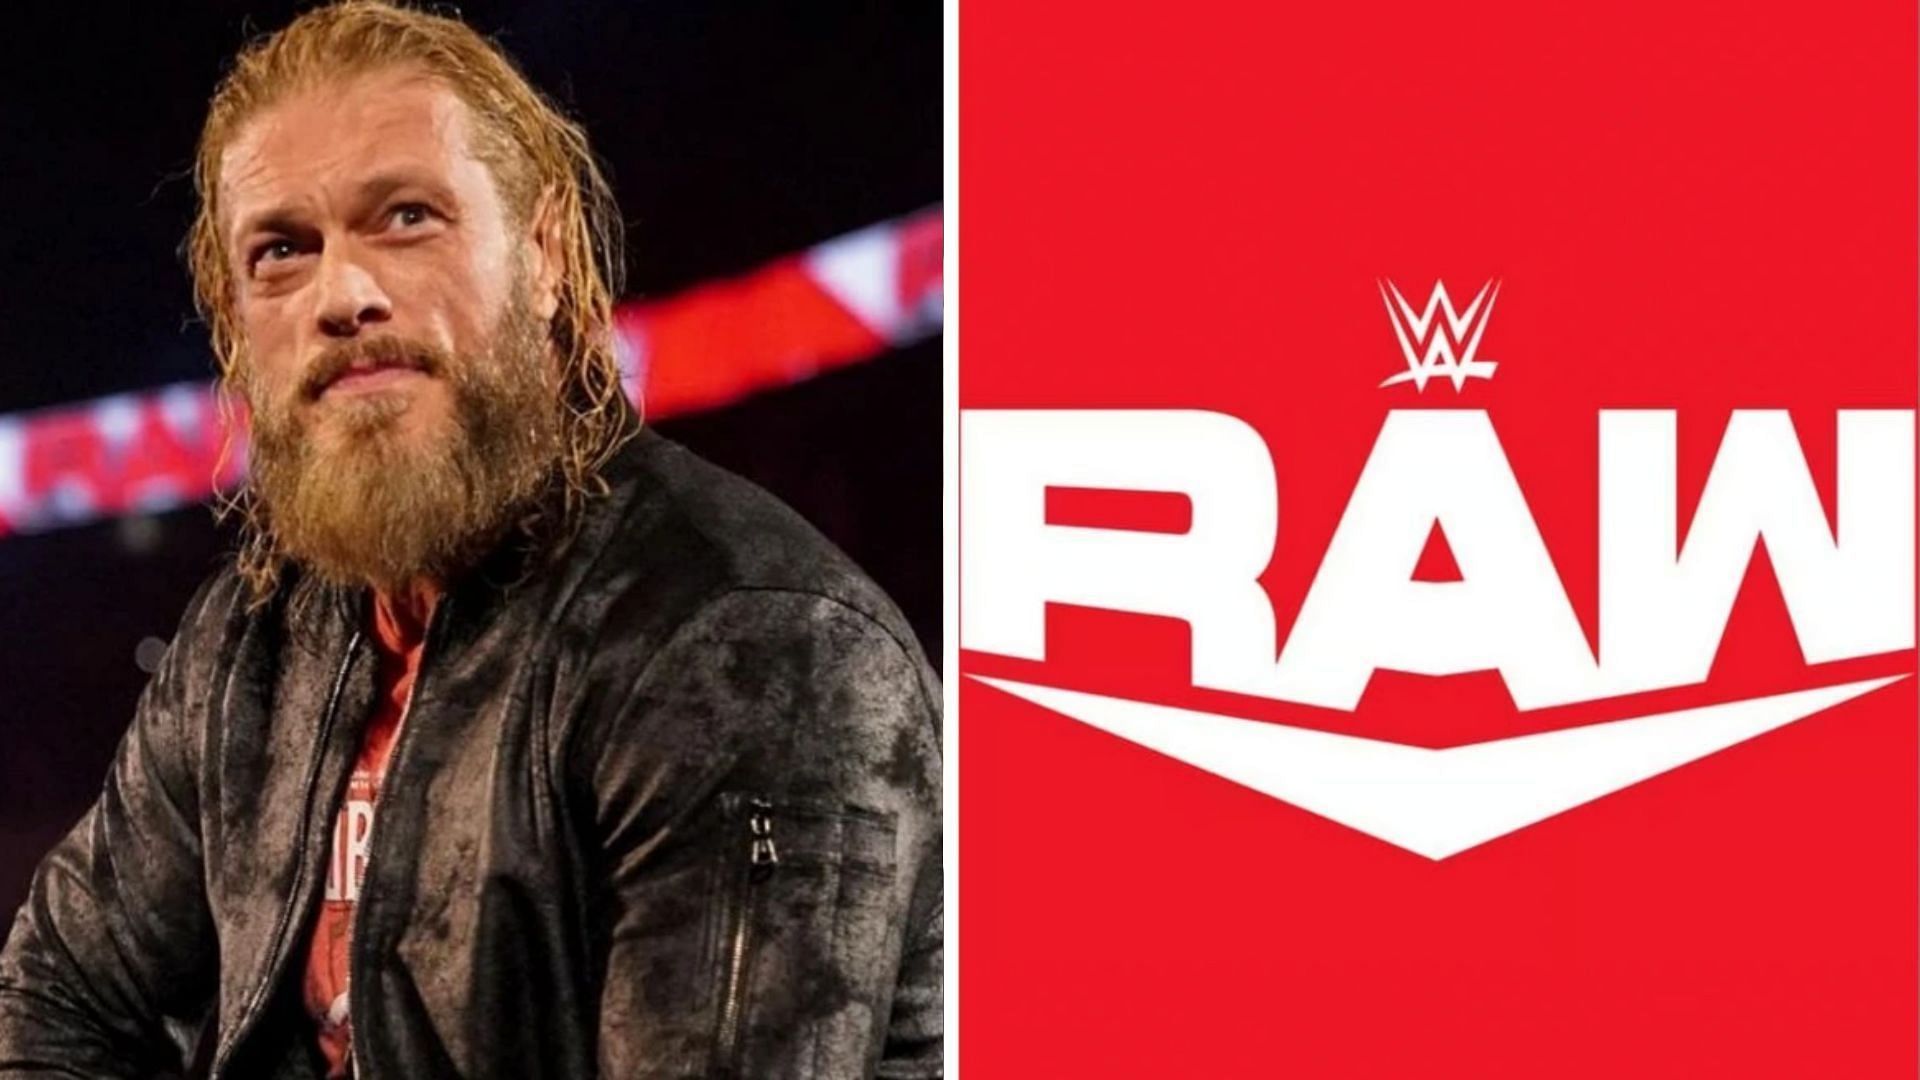 Edge made his return to WWE at the 2023 Royal Rumble